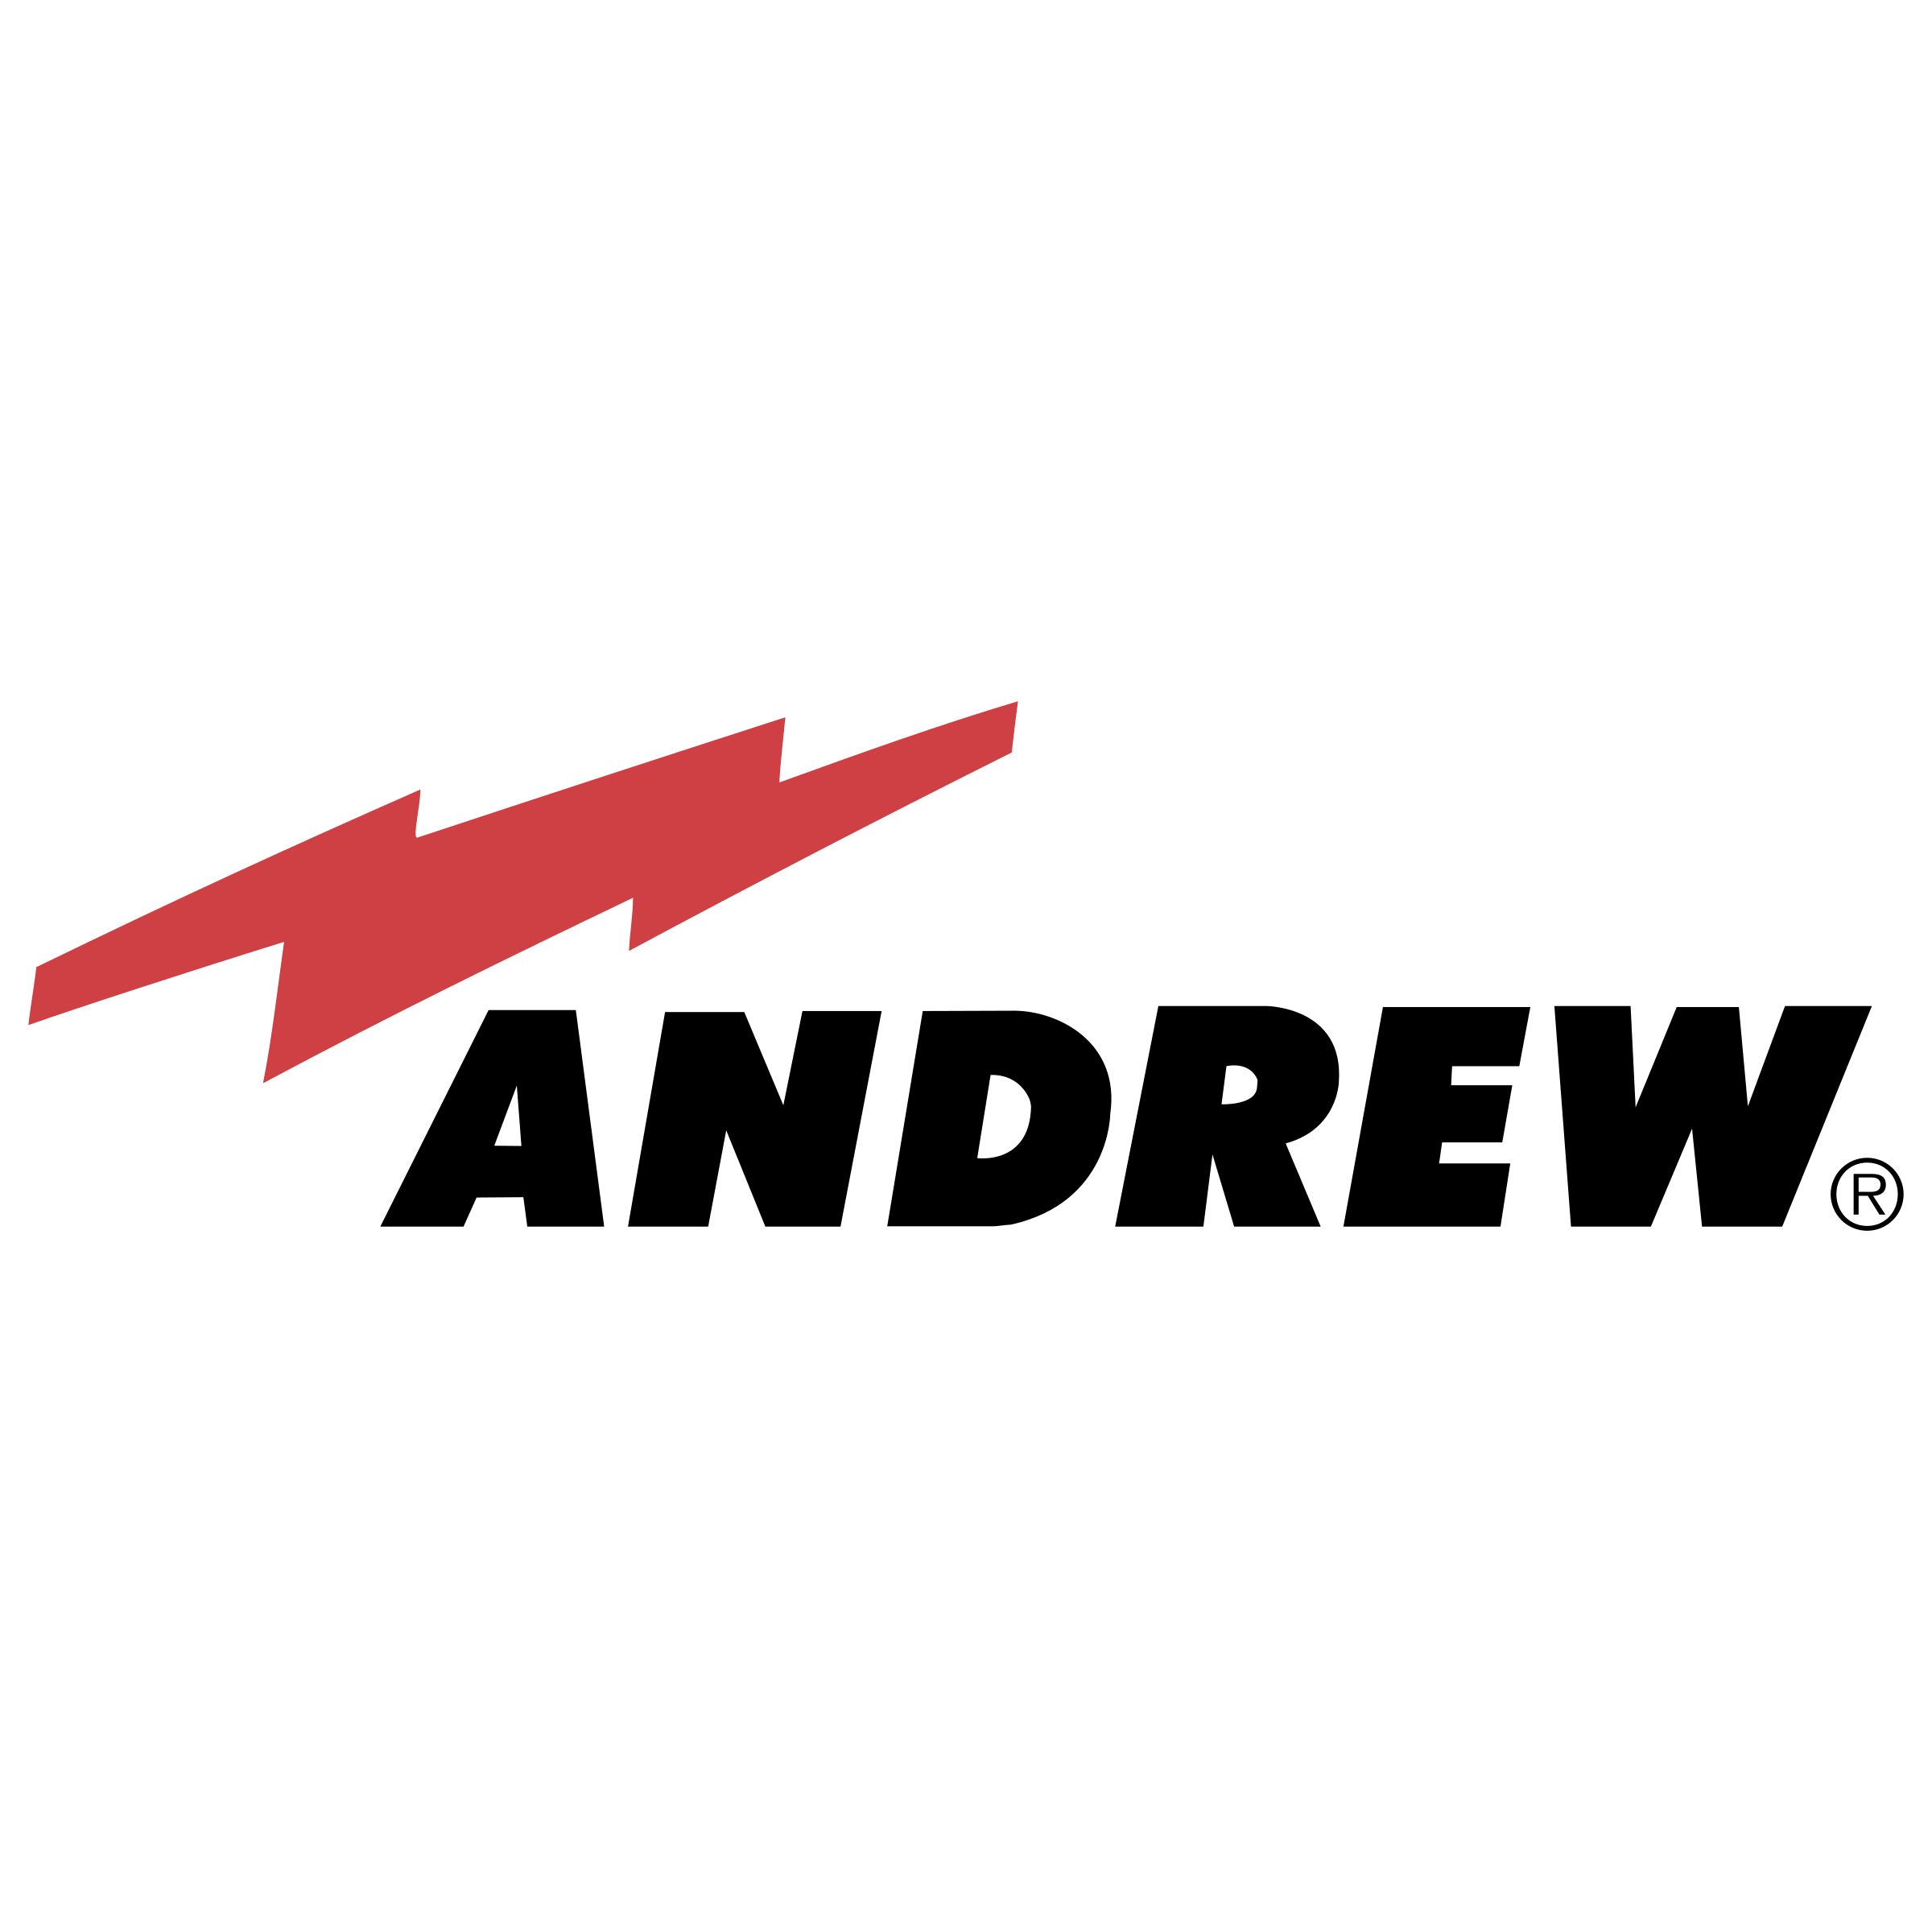 Andrew Logo - Andrew Logo PNG Transparent & SVG Vector